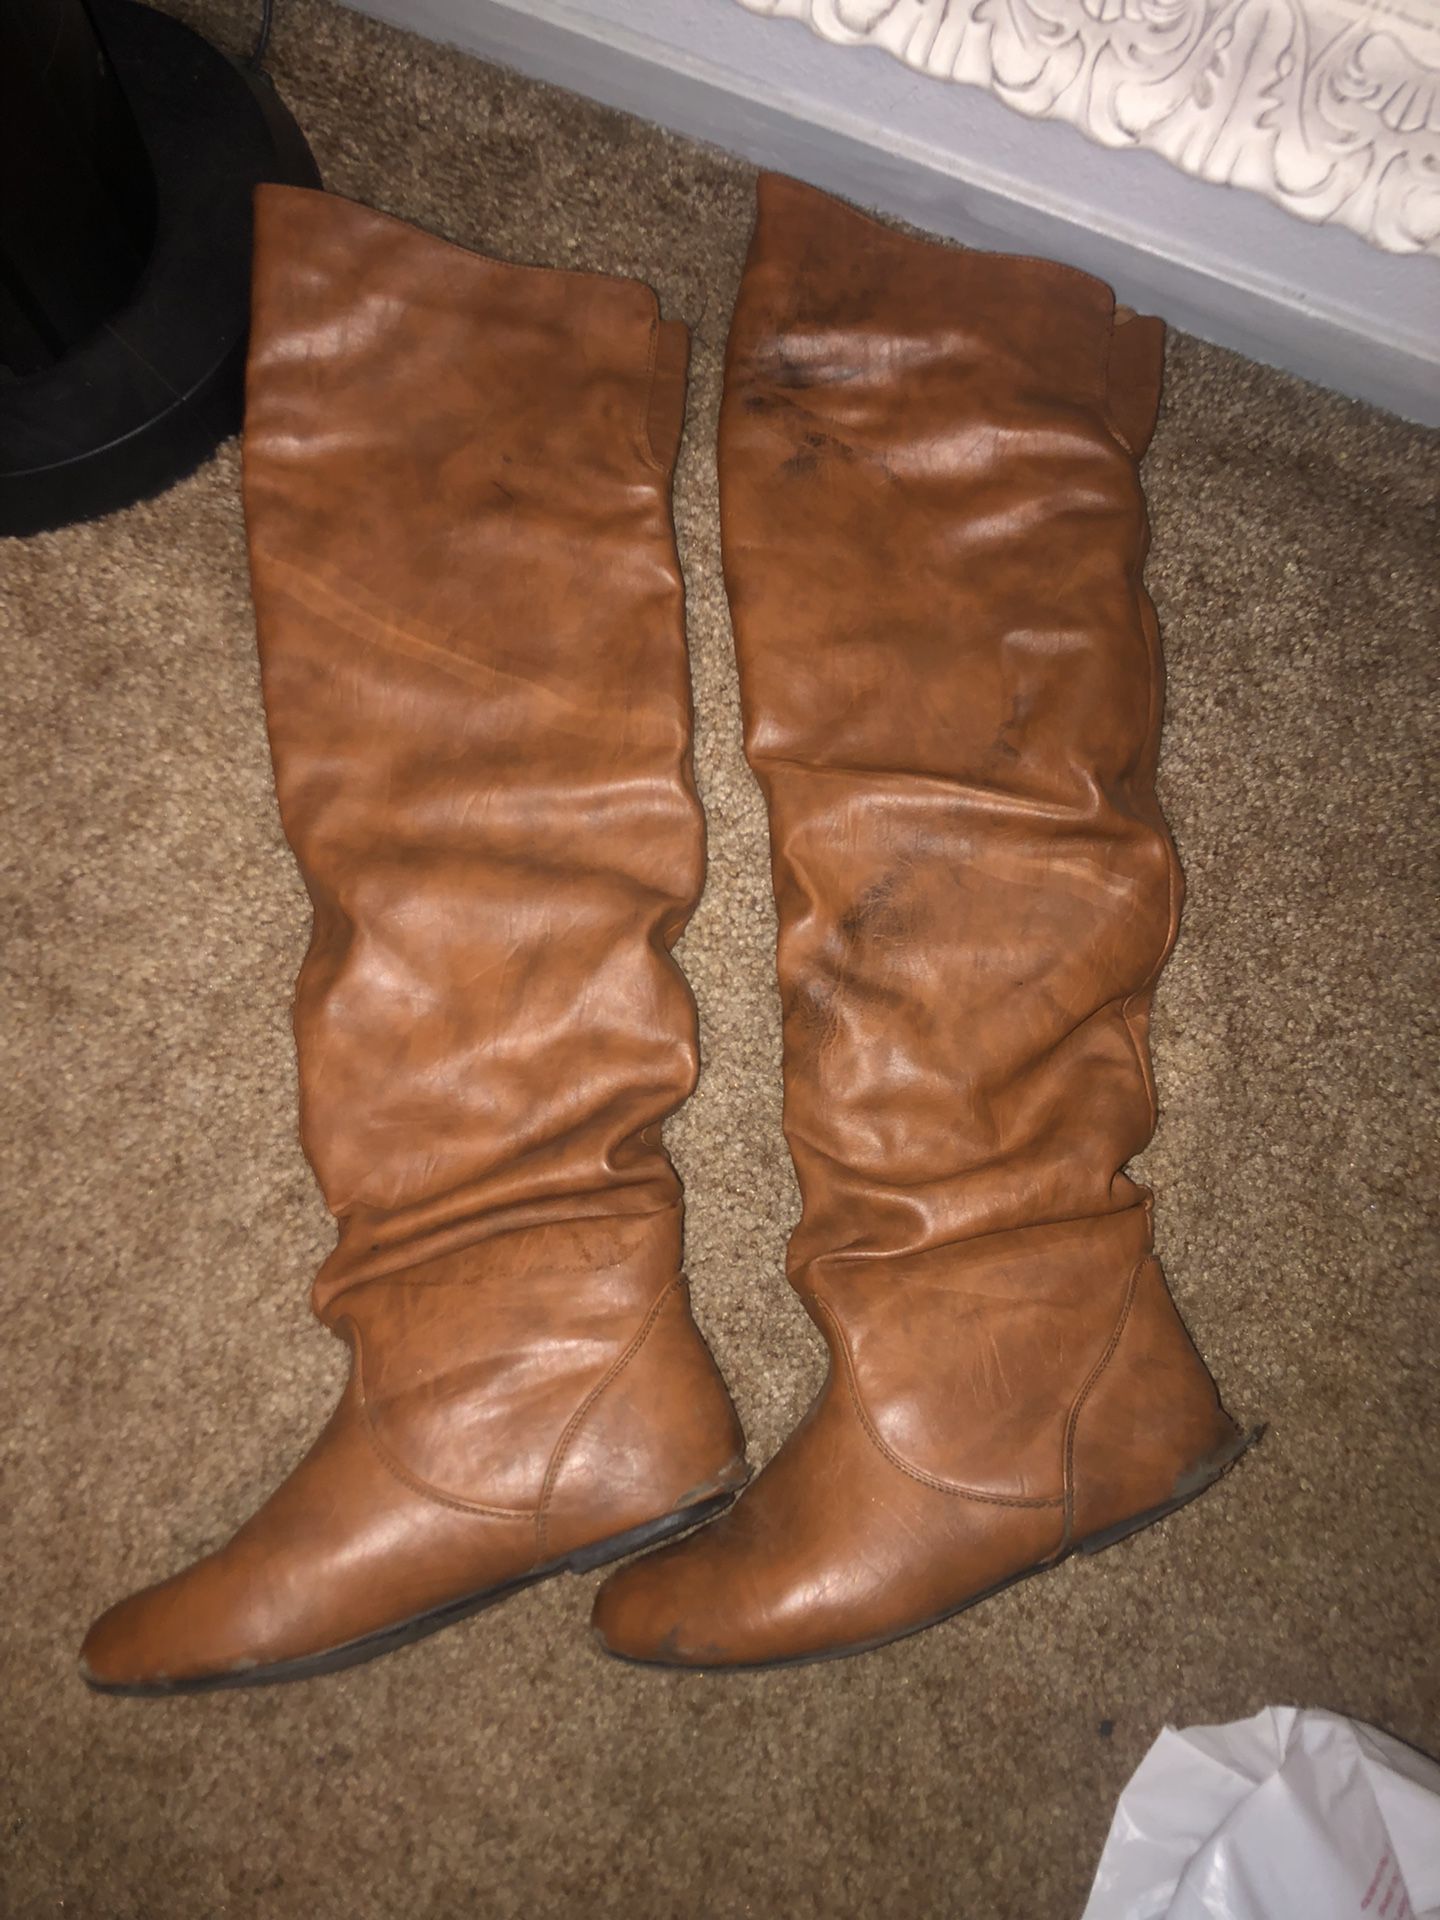 Brown Thigh High Boots - Size 7 1/2 - CHEAP!!!